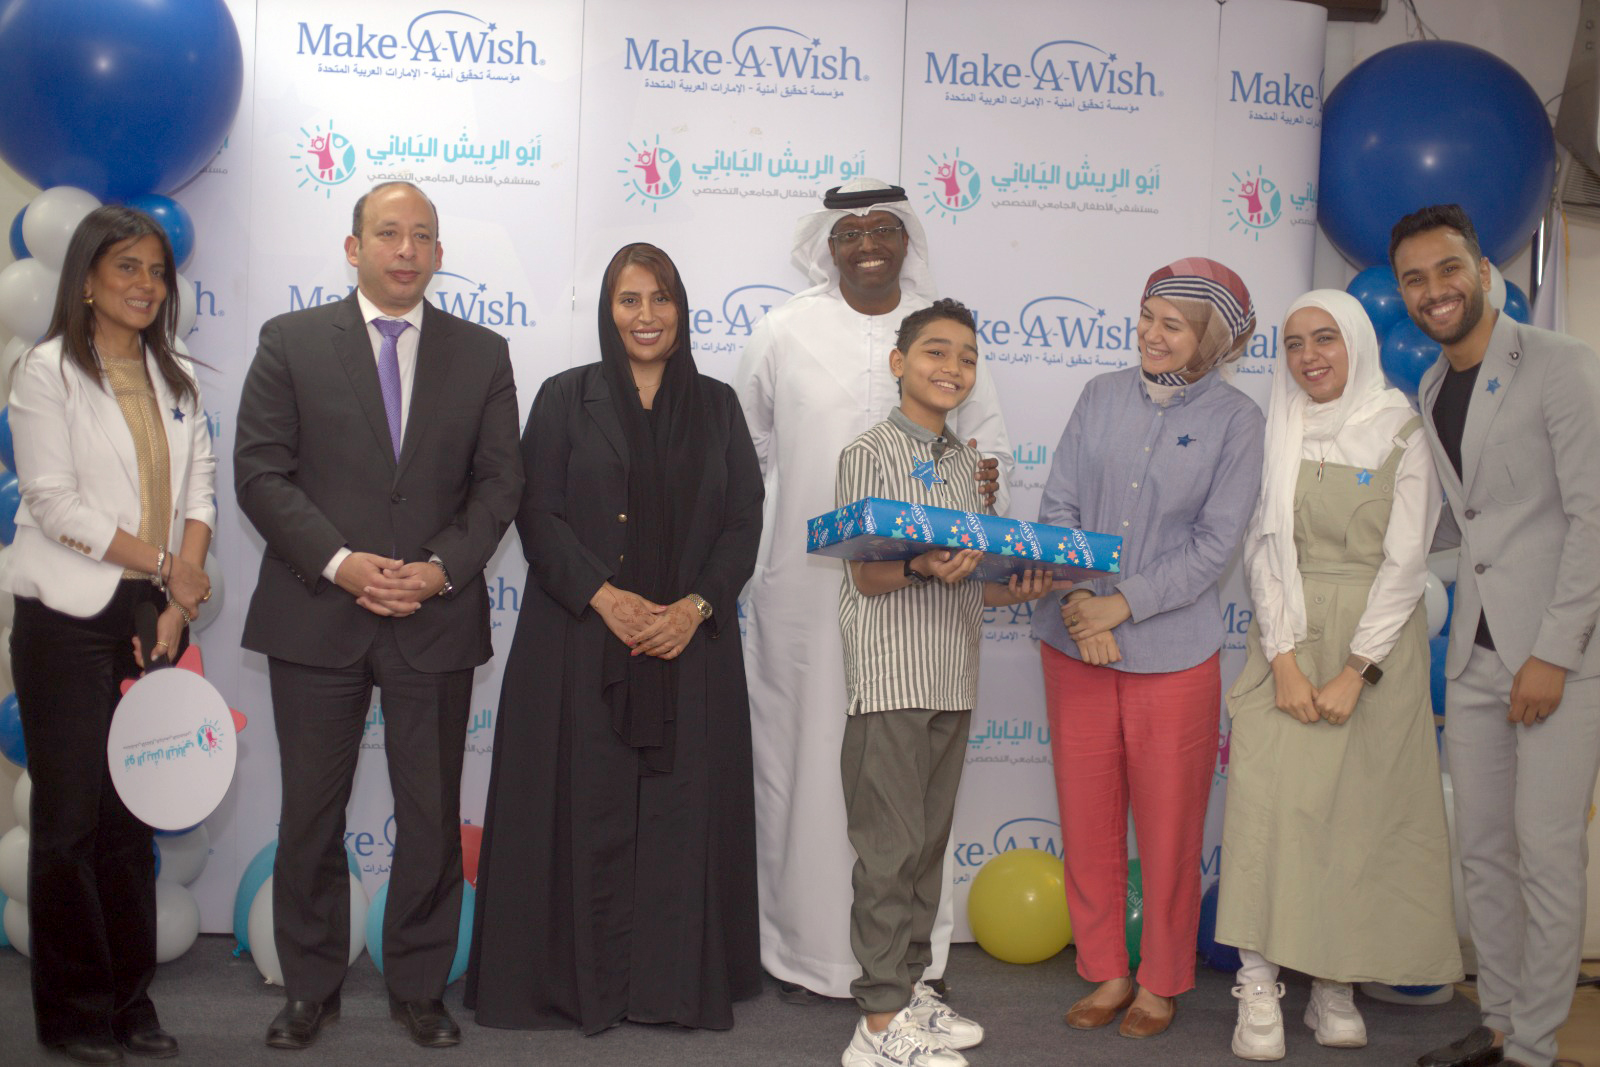 'make-a-wish foundation uae' fulfils wishes of nine sick children at abu elreesh japanese children's hospital in cairo